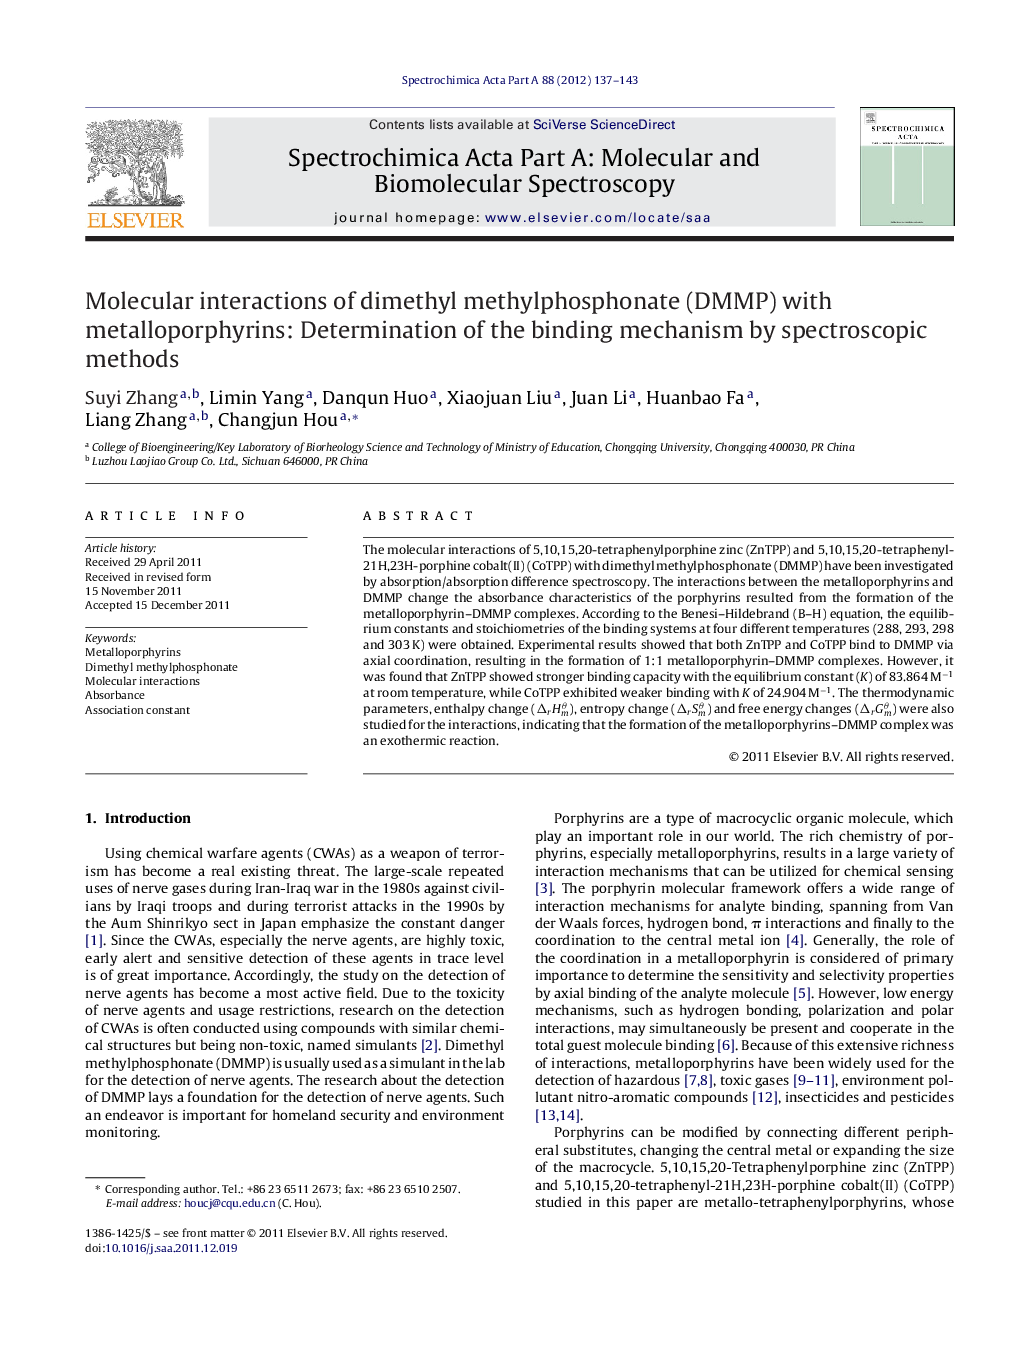 Molecular interactions of dimethyl methylphosphonate (DMMP) with metalloporphyrins: Determination of the binding mechanism by spectroscopic methods